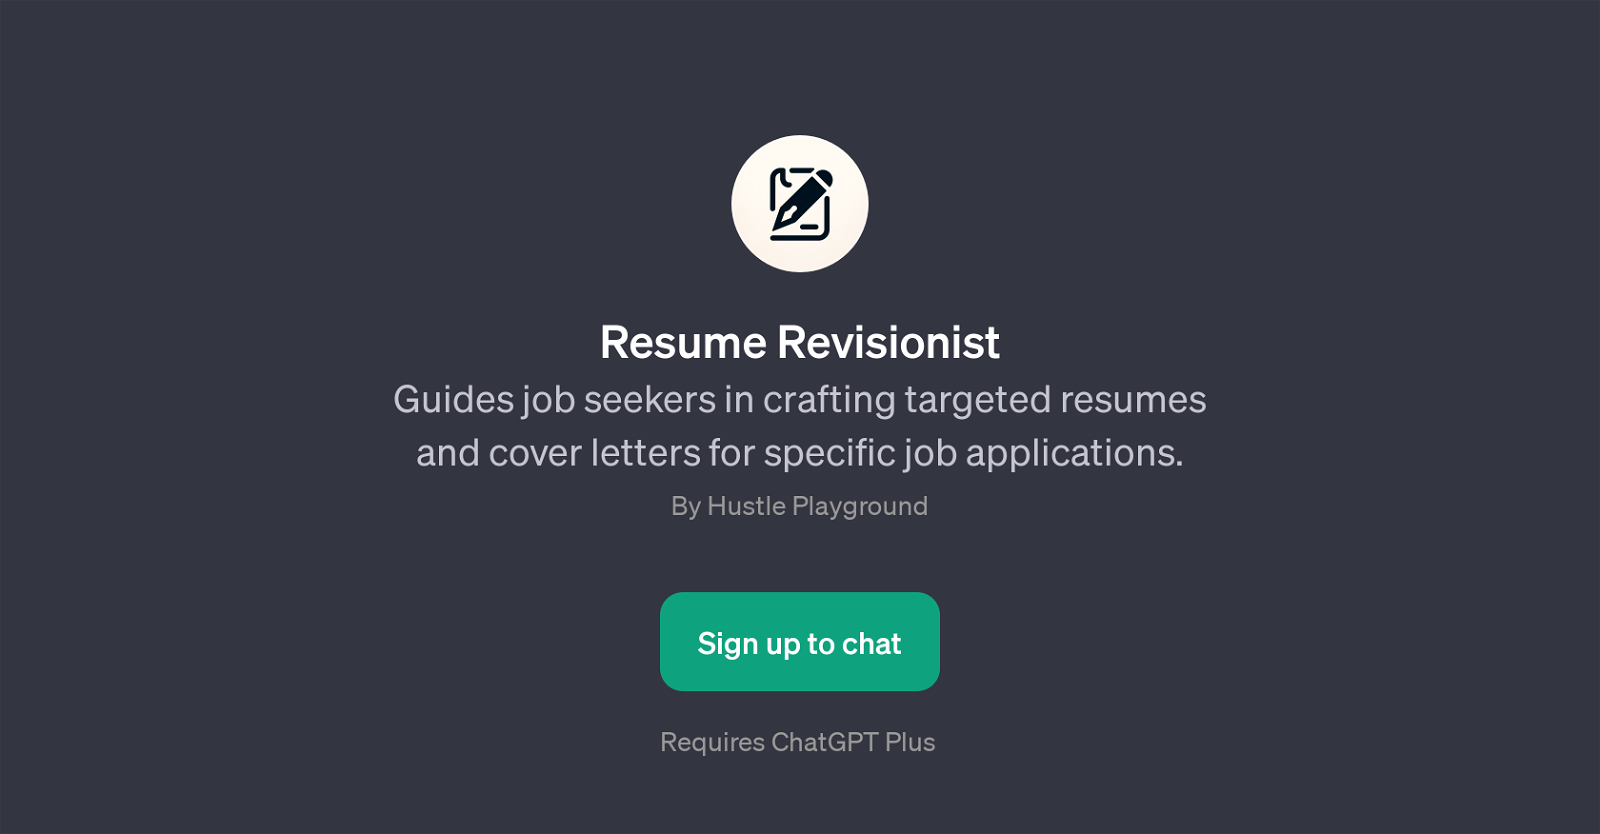 Resume Revisionist website